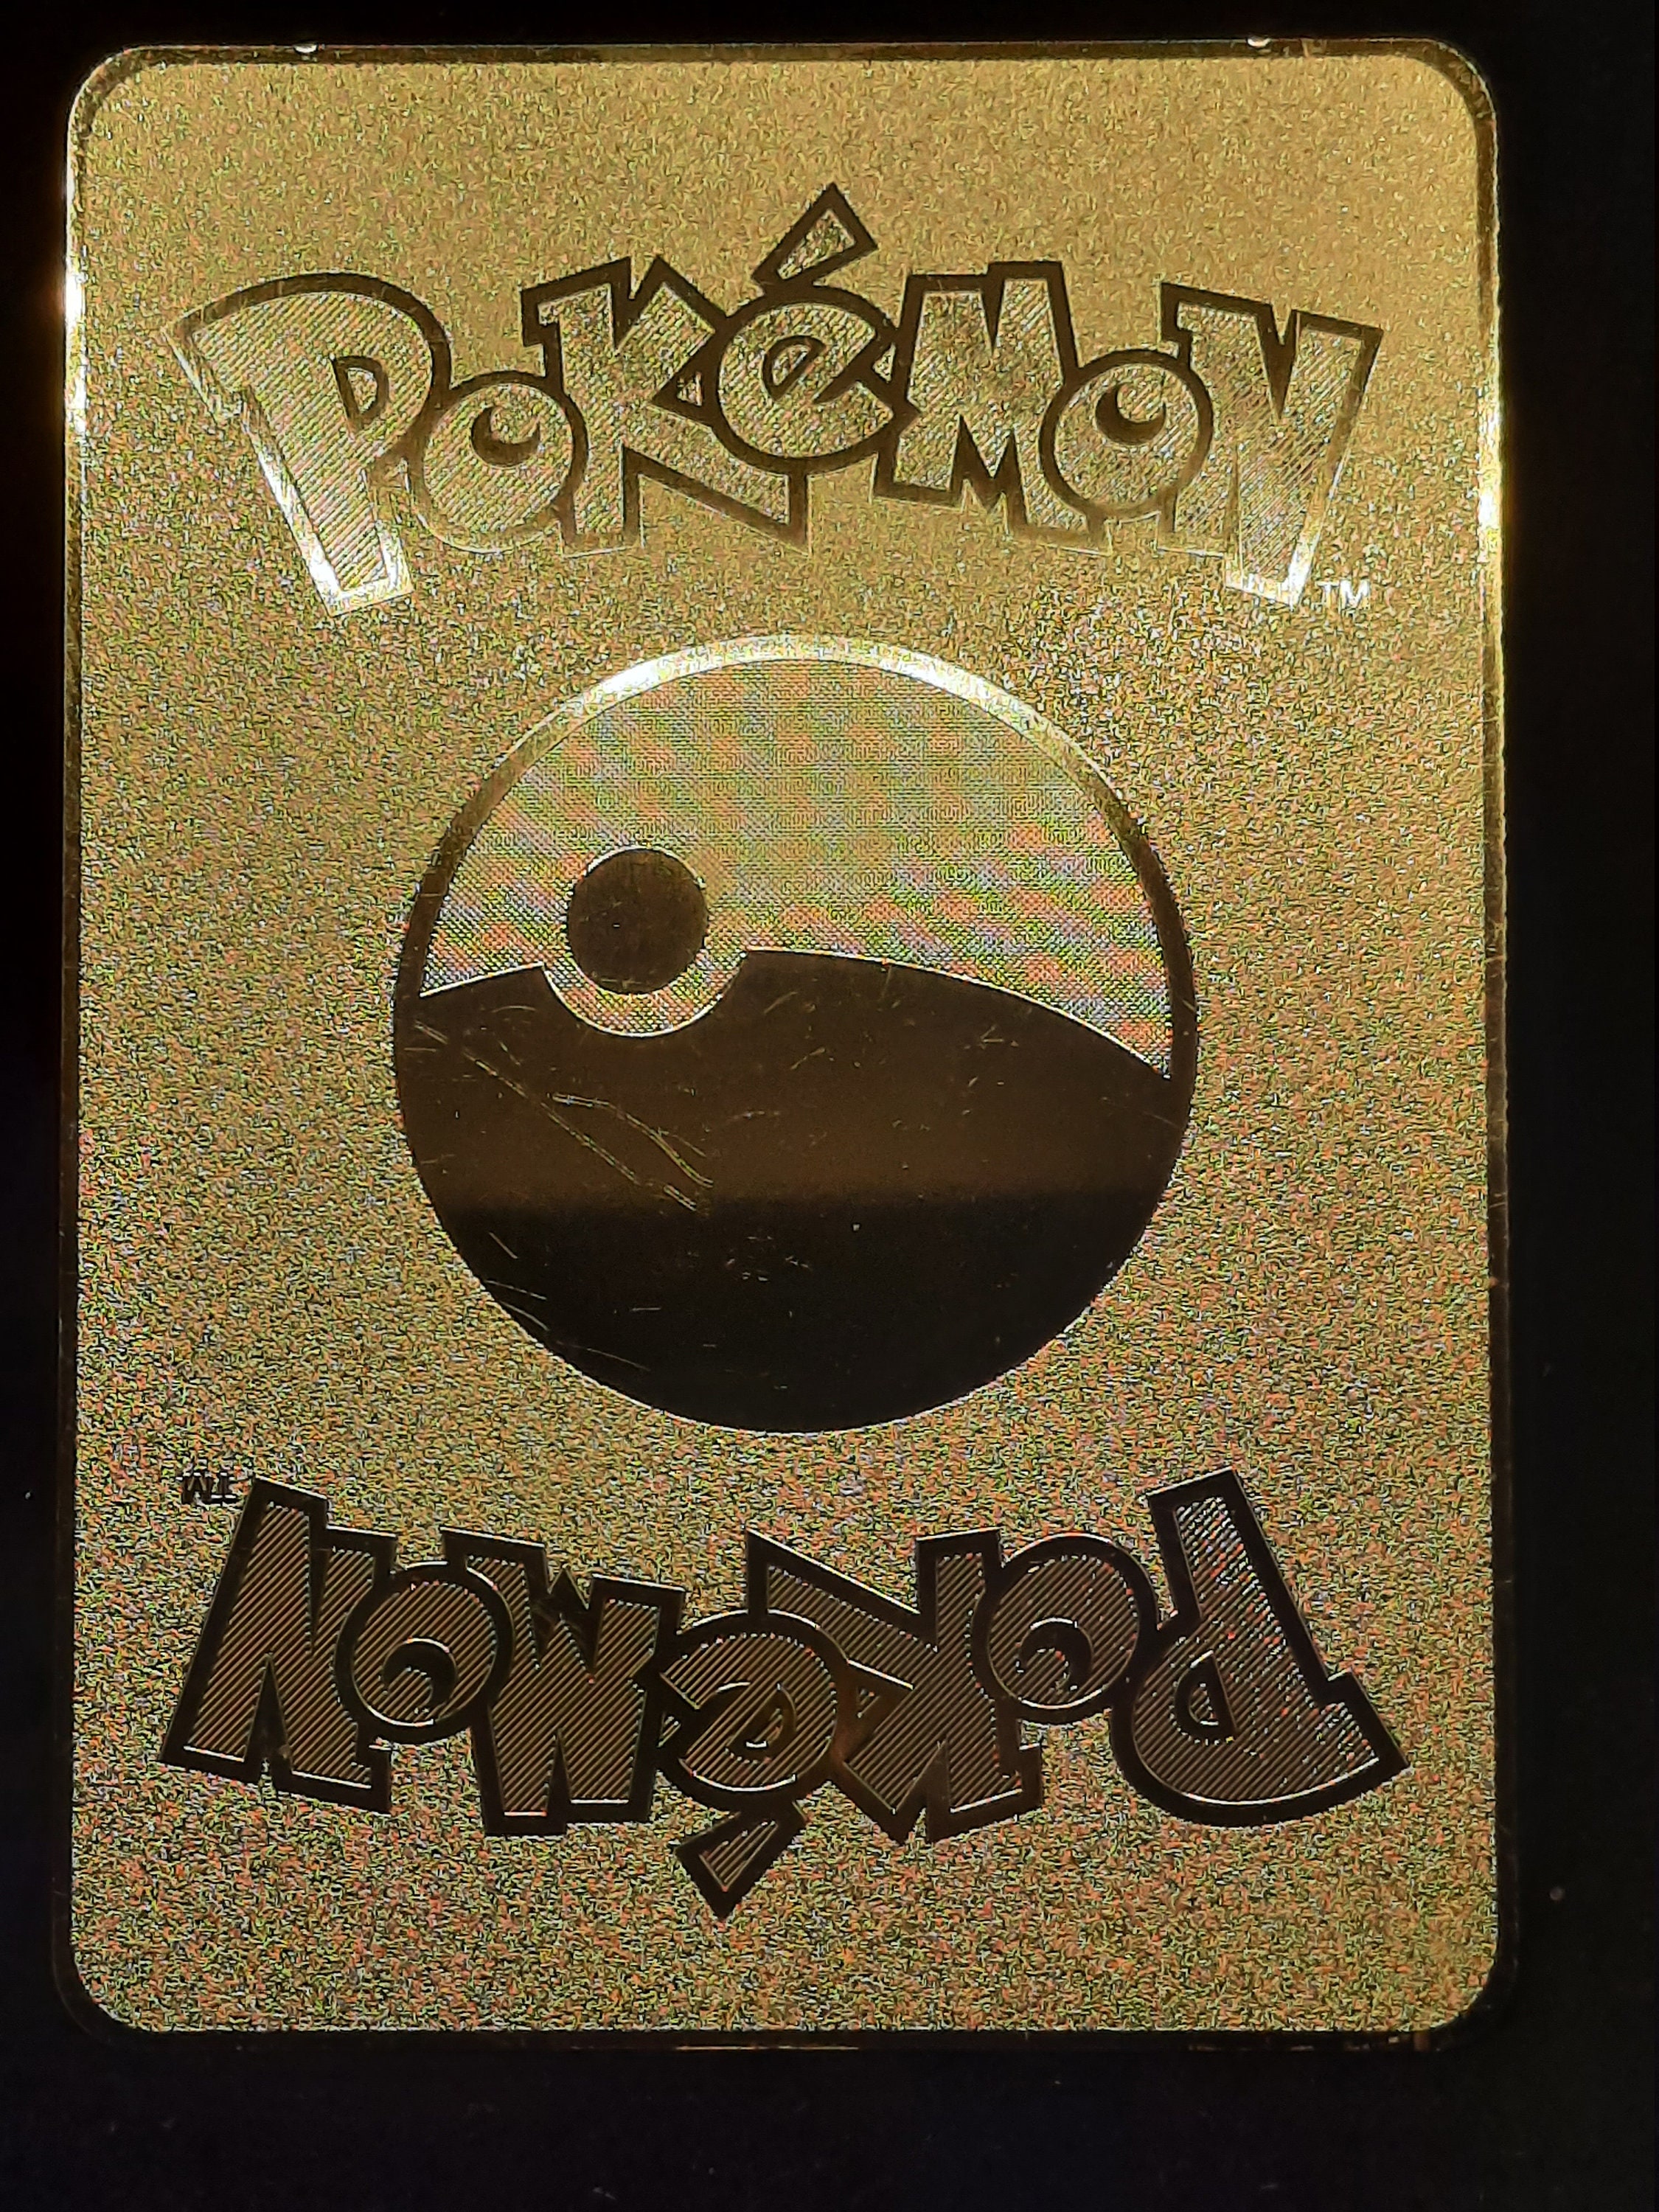 Metal Card Pack Vmax Case Mew GX Box Gold Silver Charizard Spanish Set  Eevee Letter Black English Pikachu Paper V Mewtwo